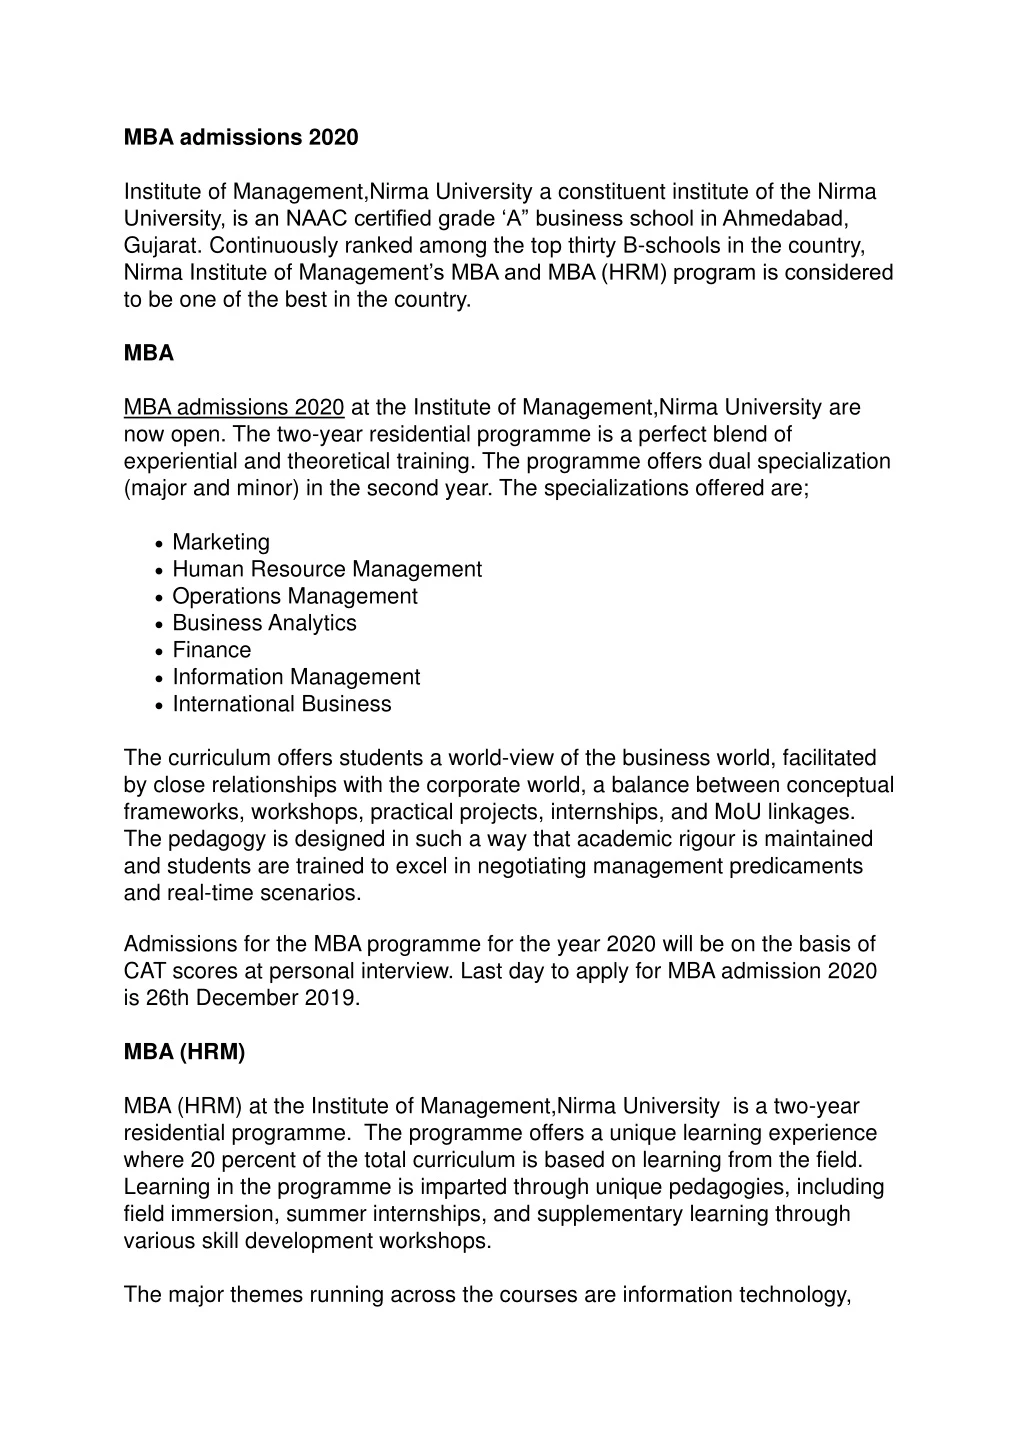 mba admissions 2020 institute of management nirma